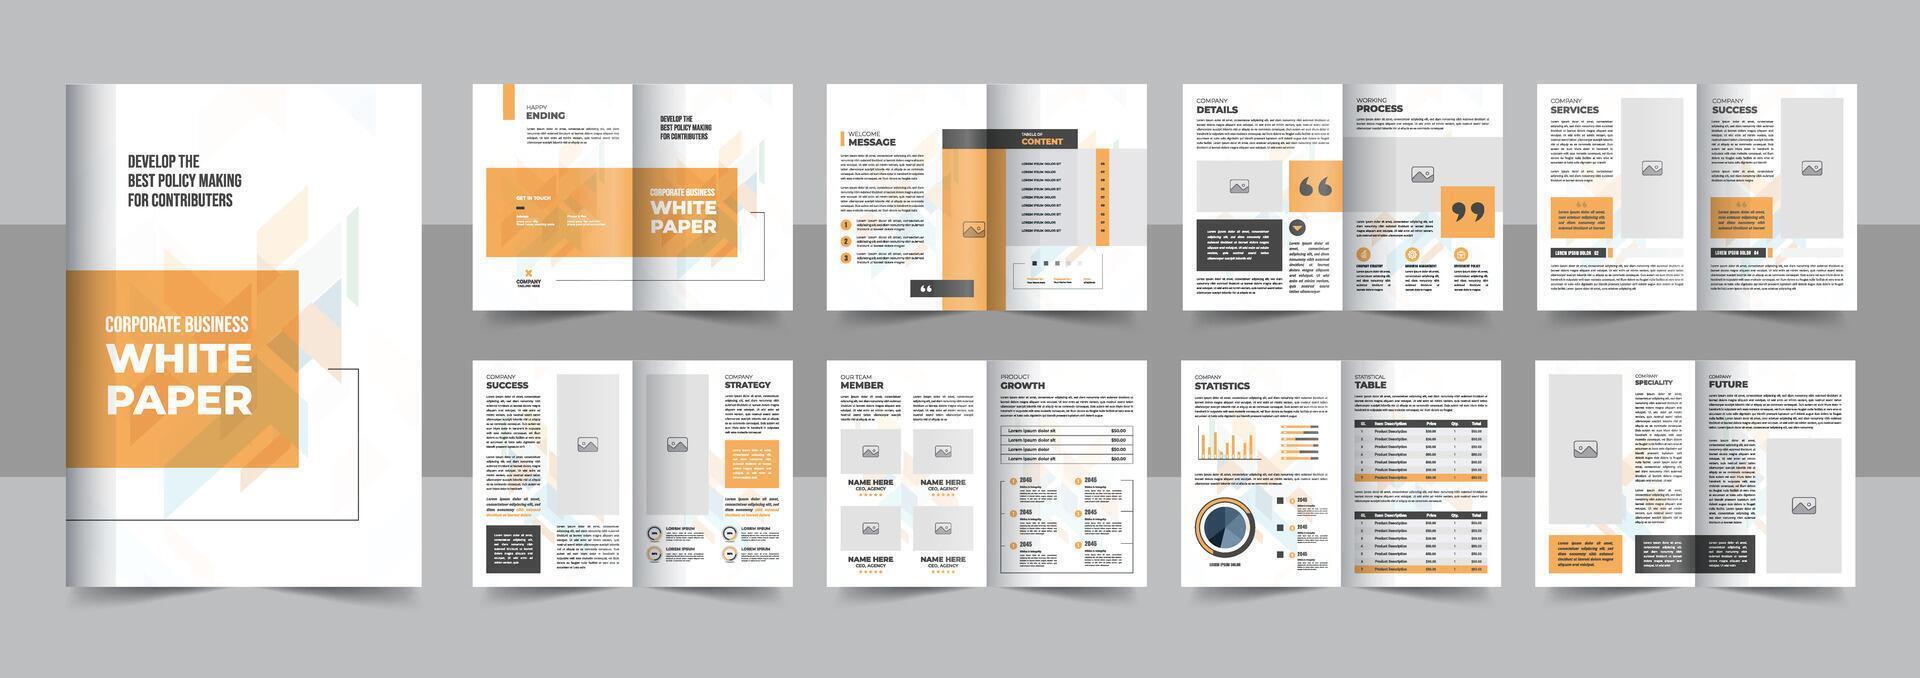 Corporate white paper, white paper layout design, Company brochure design template vector